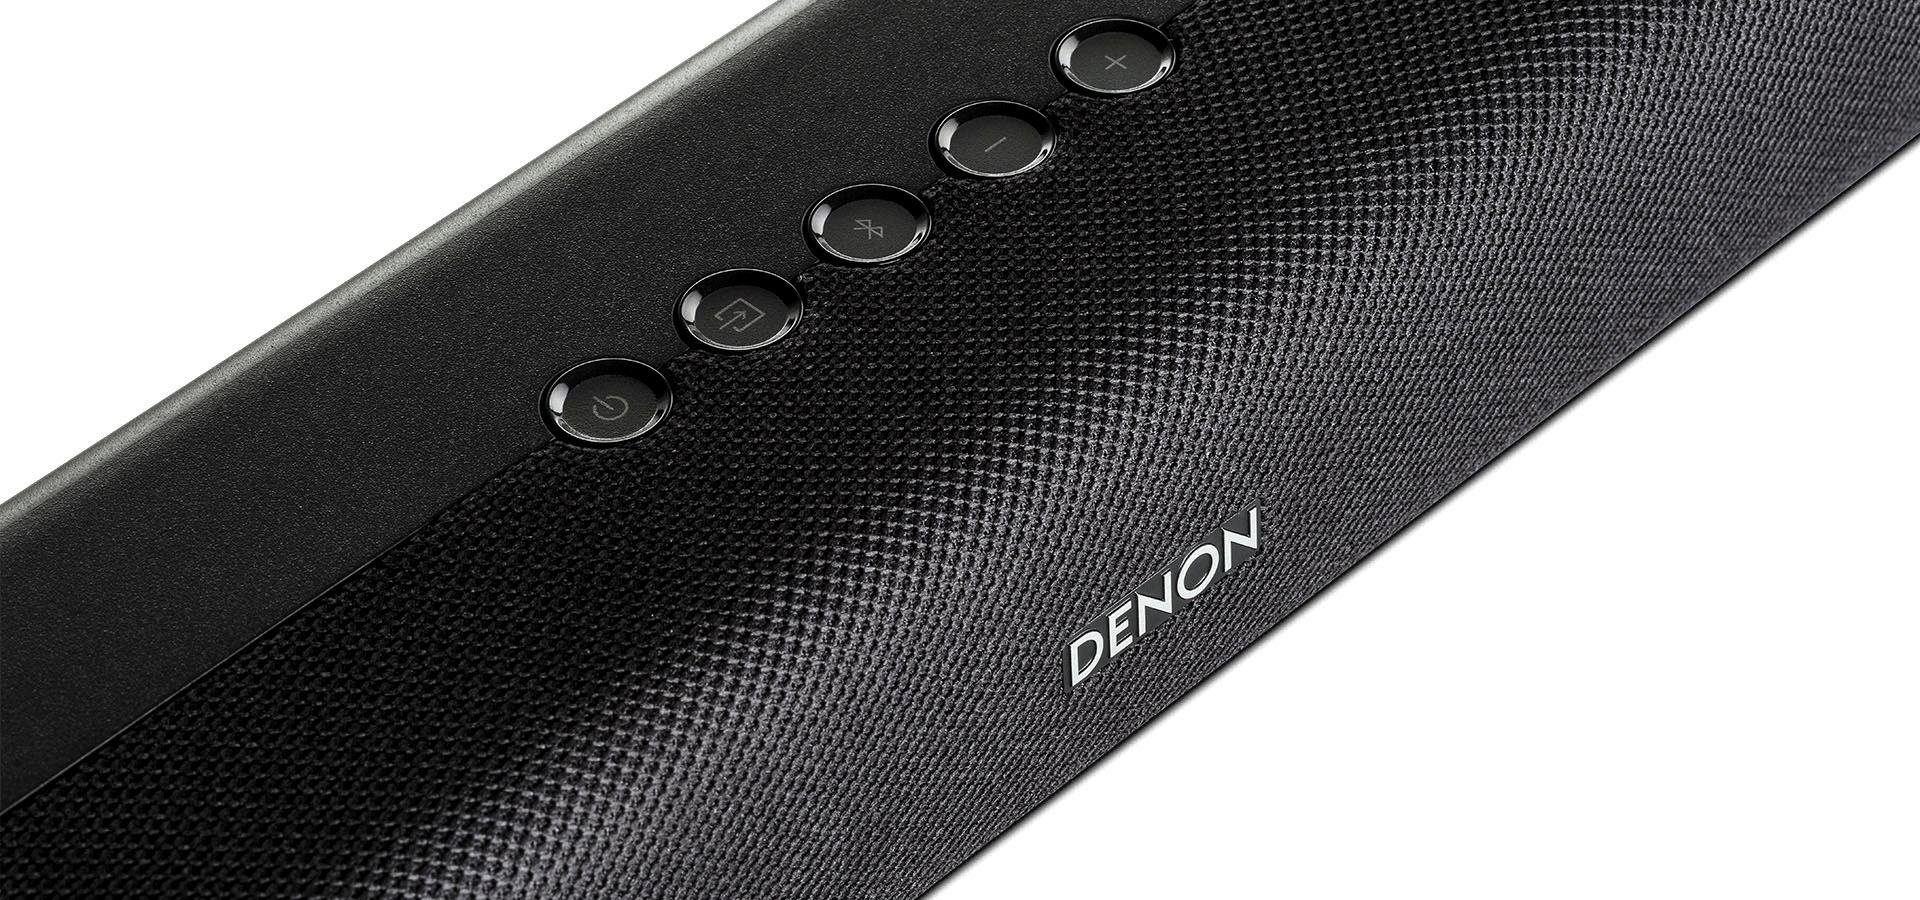 Denon DHT-S316 Soundbar (Bluetooth)